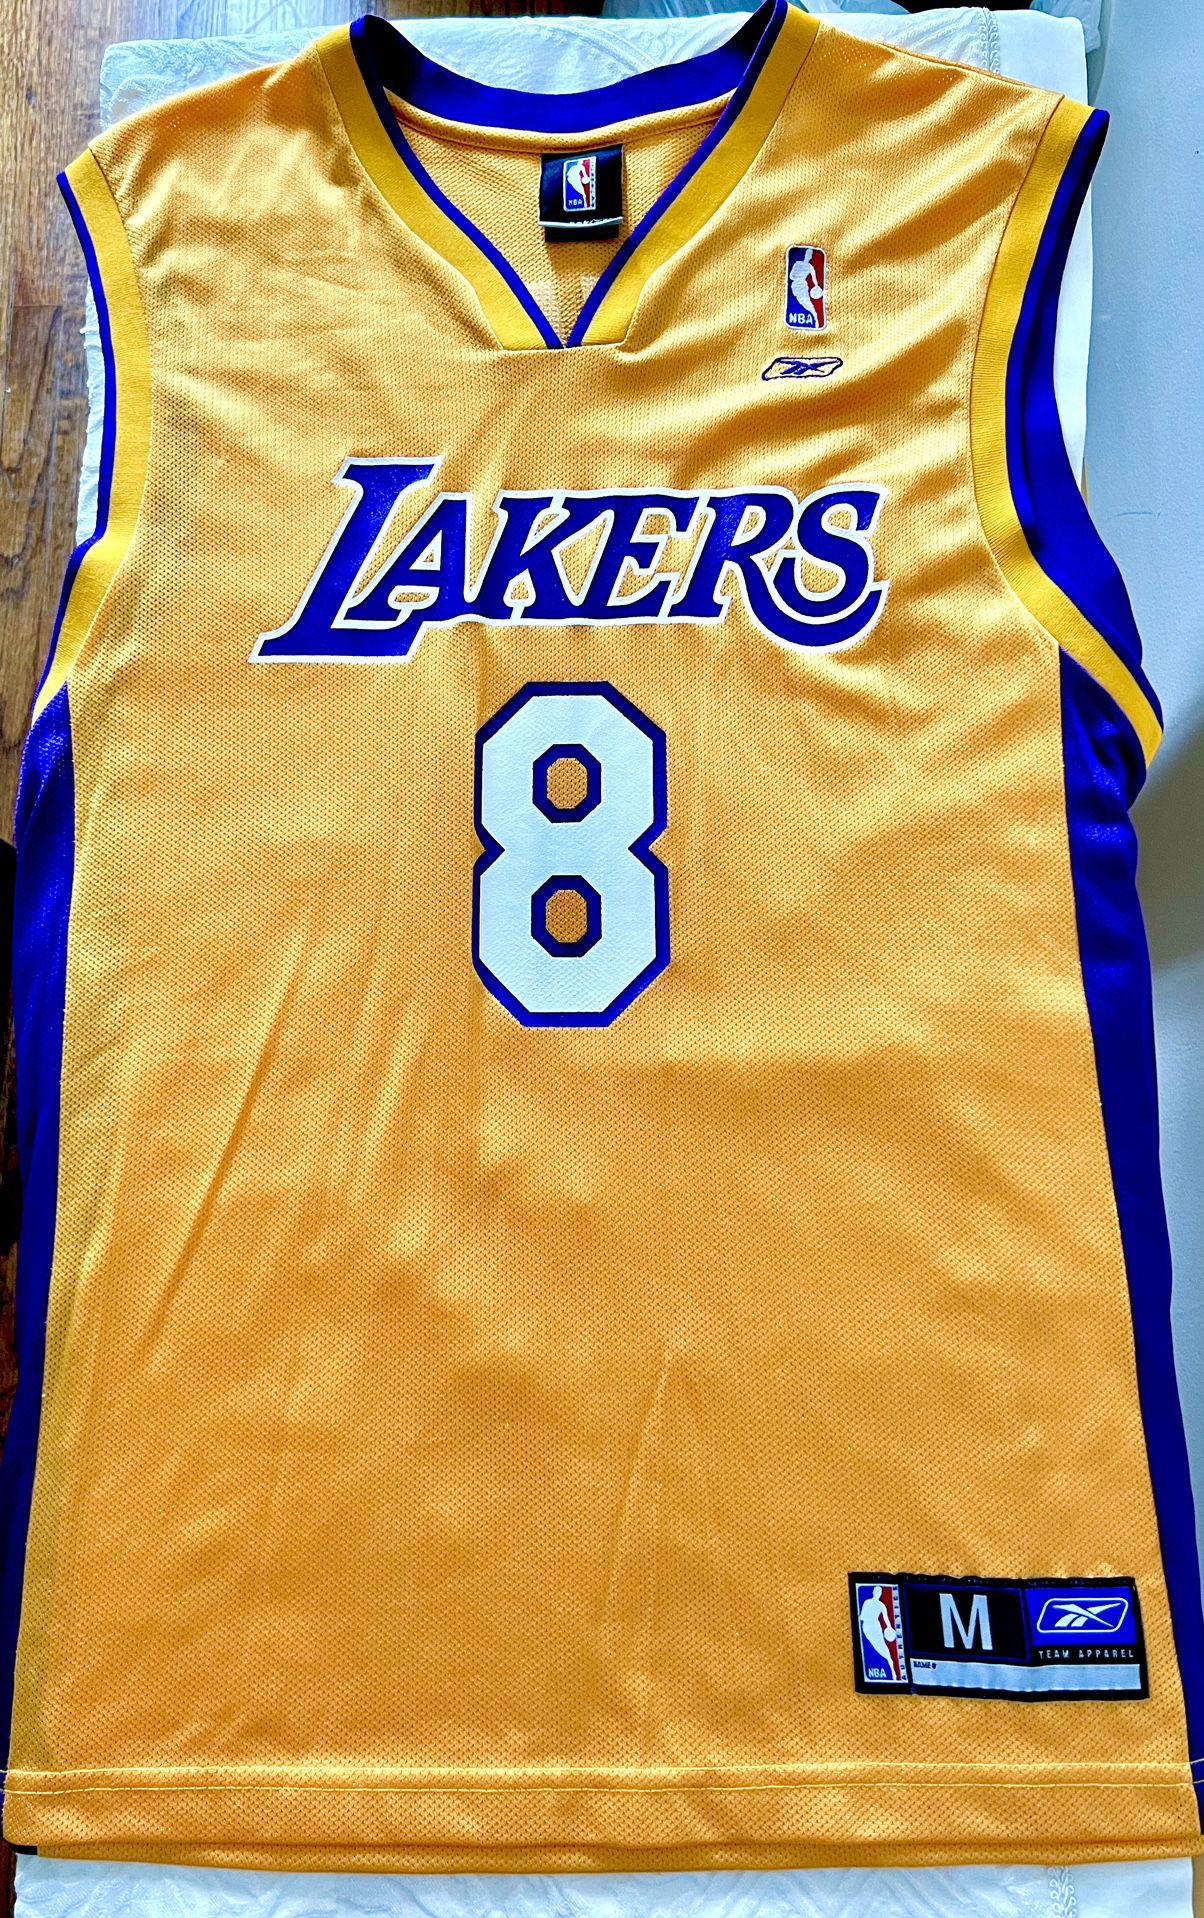 # 8 Lakers Kobe Bryant - Reebok Jersey Medium 